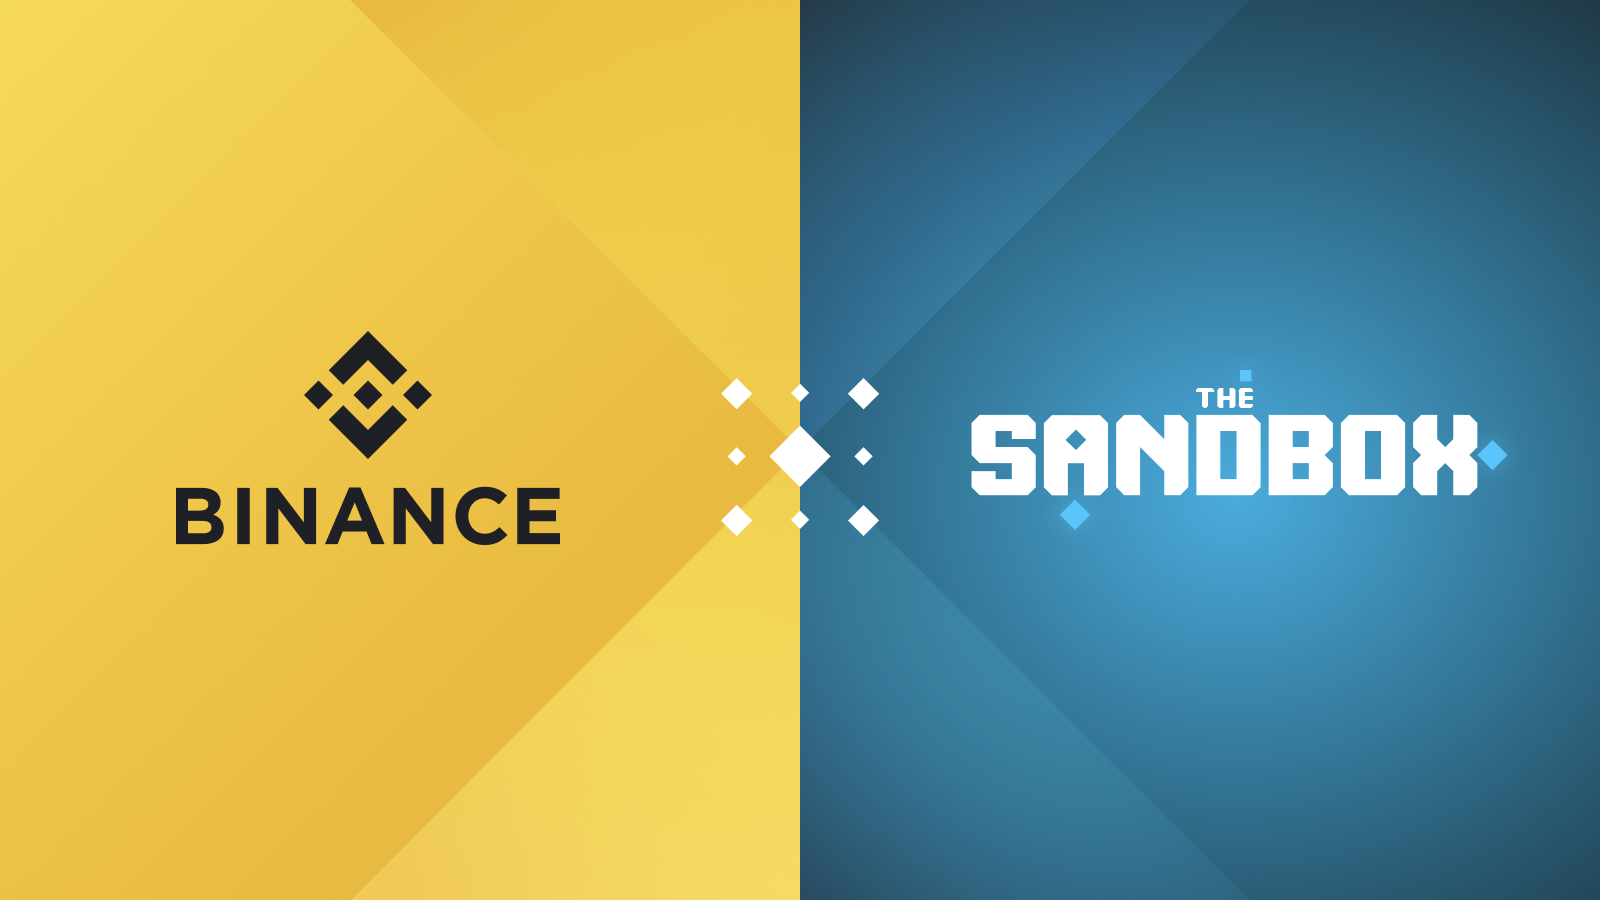 Game On: Buying Digital LAND NFTs in The Sandbox